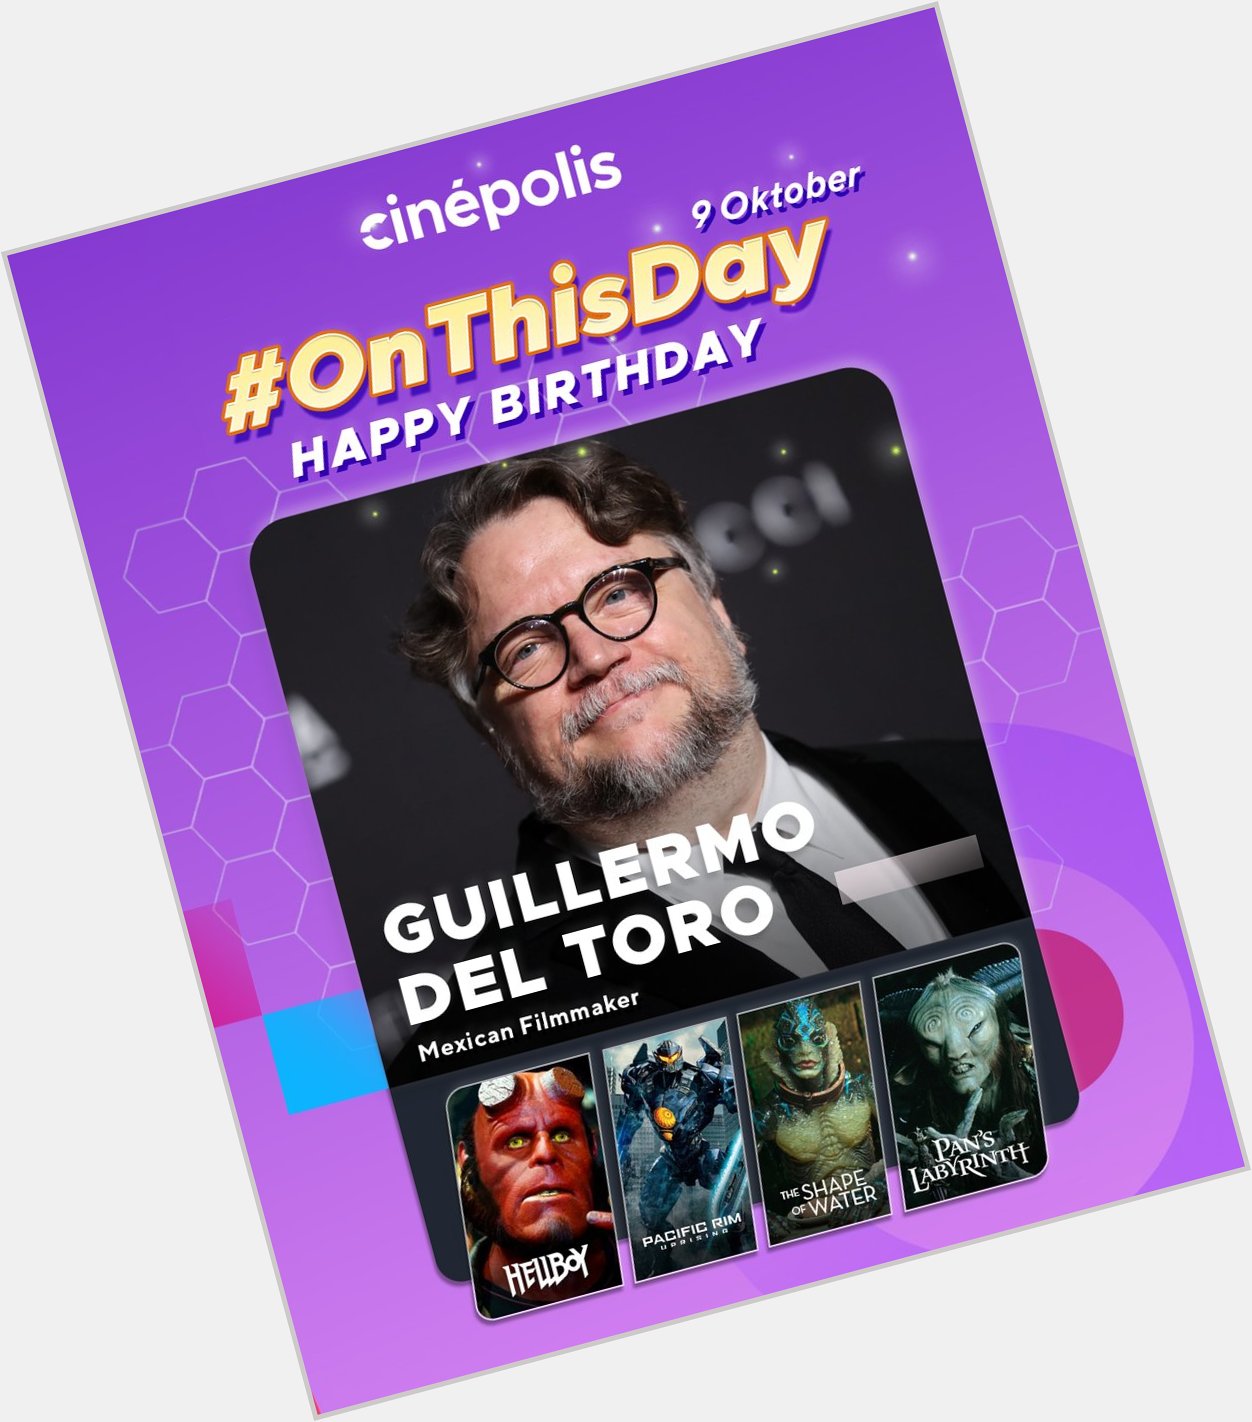 Happy birthday, Hayoo, yang mana nih film garapan Guillermo del Toro favoritmu? 